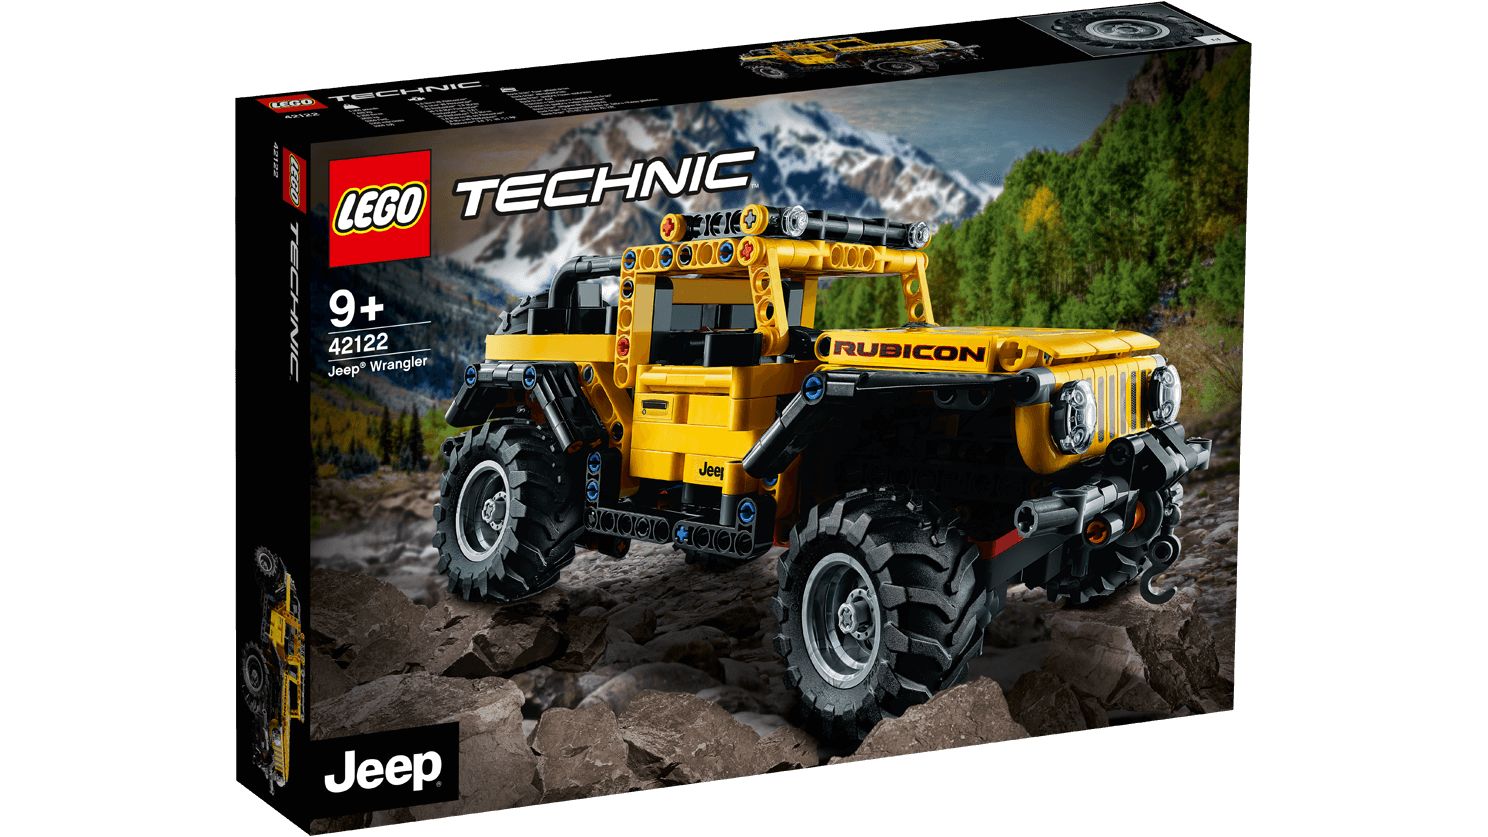 LEGO Technic 42122 Jeep® Wrangler LEGO_42122_Box1_v29_1488.jpg